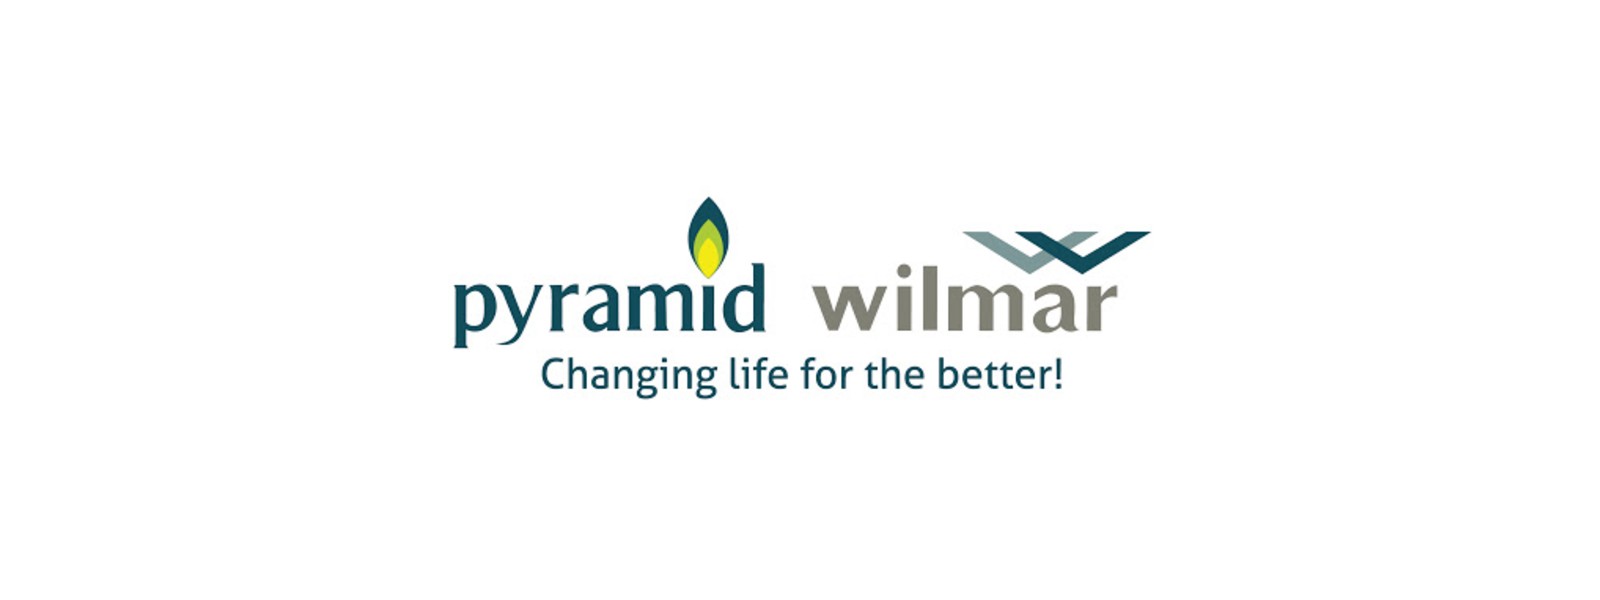 Pyramid Wilmar denies allegations